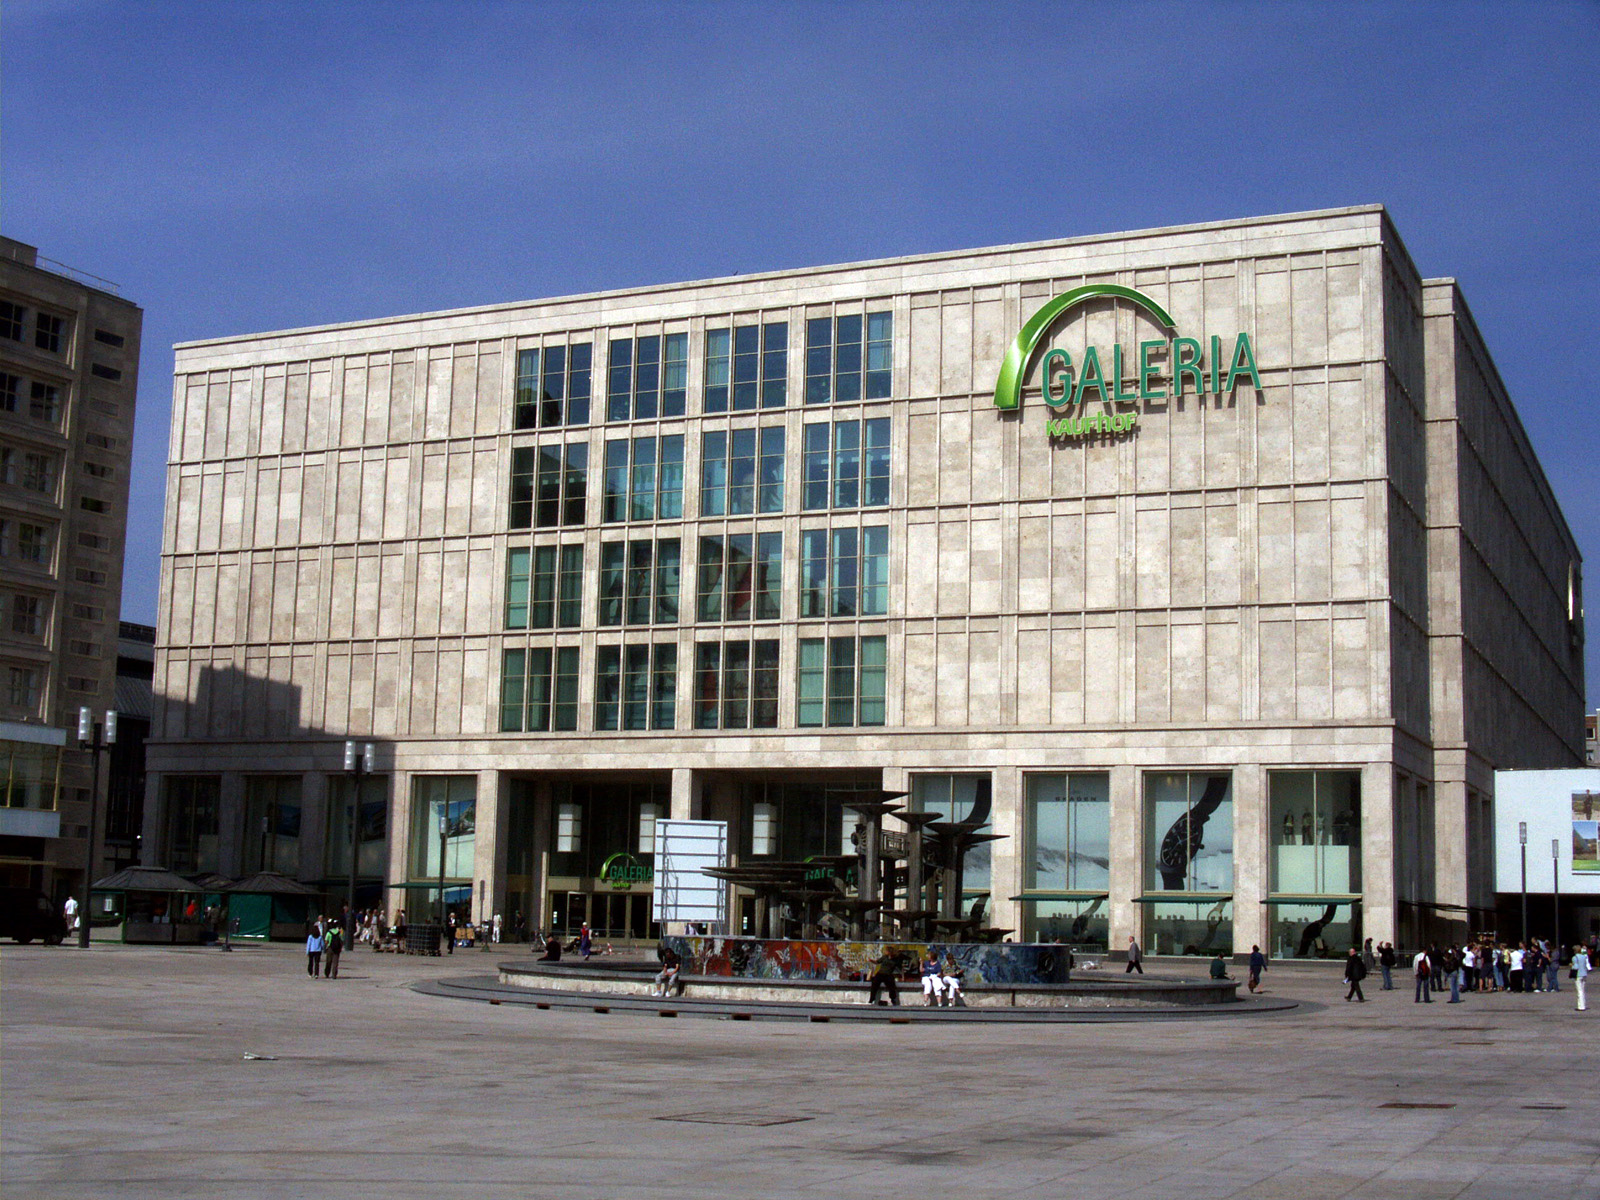  Galeria Kaufhof Berlin Alexanderplatz